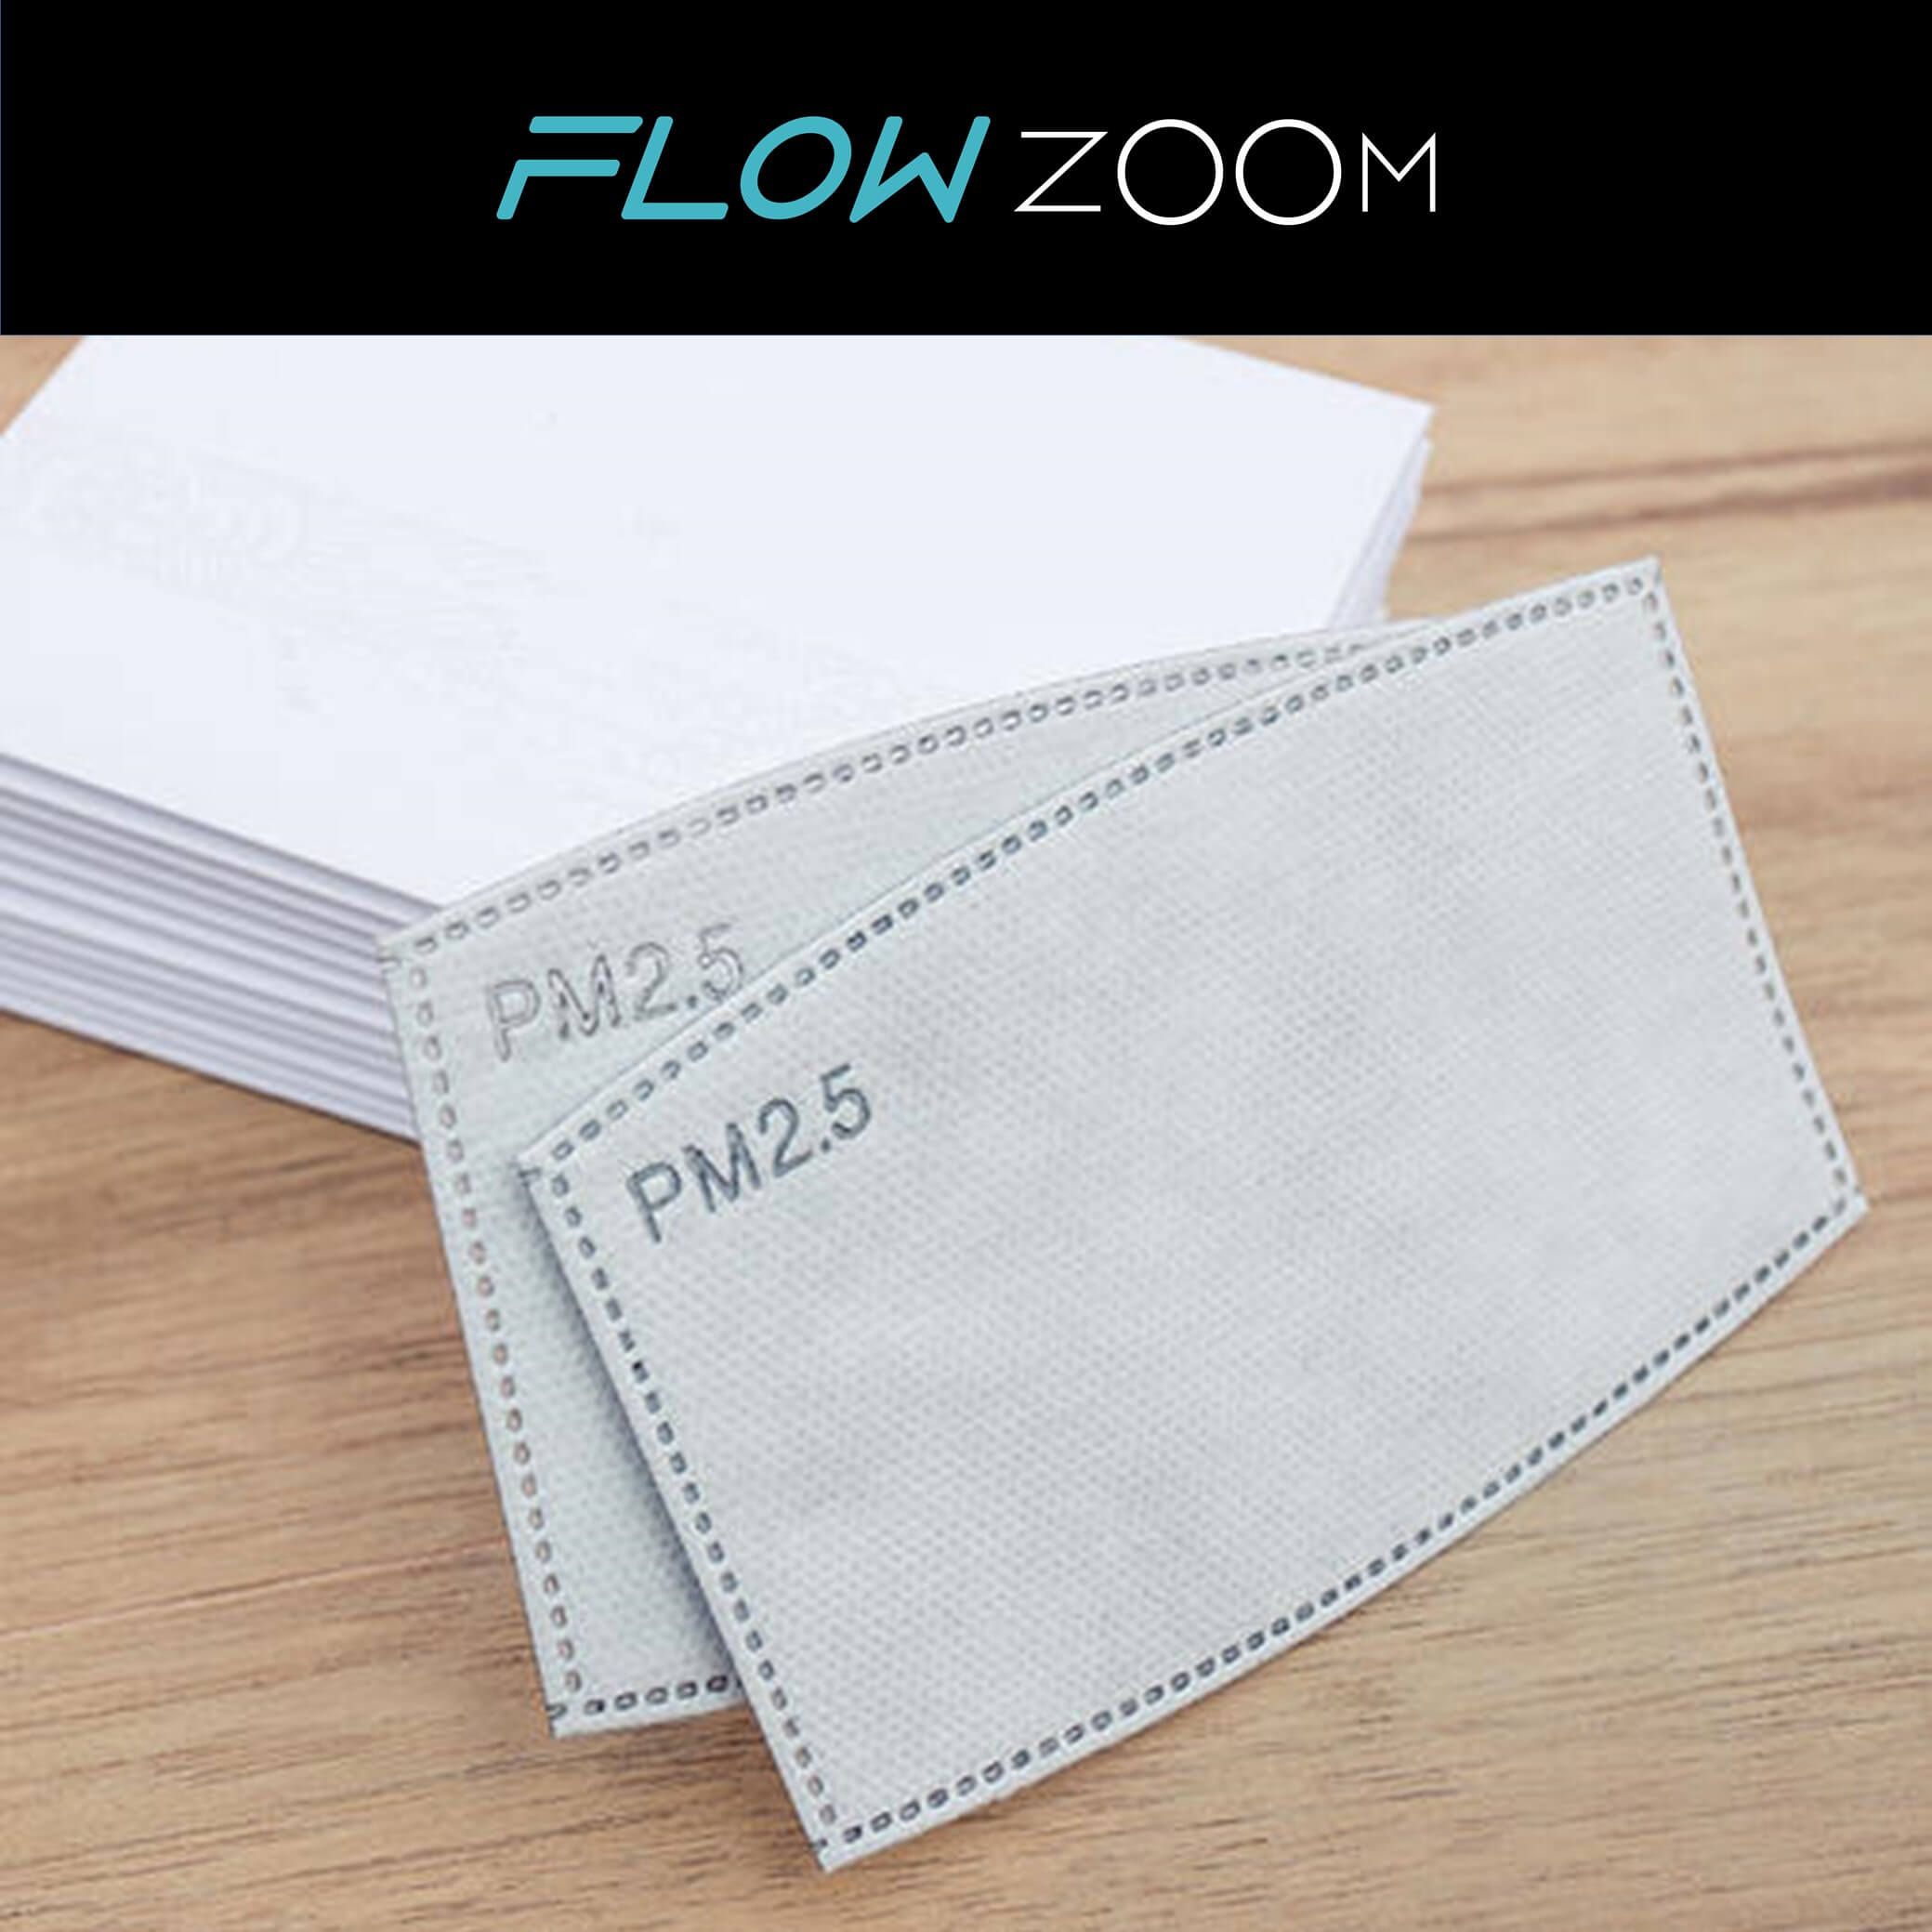 Filter for FLOWZOOM Face Mask